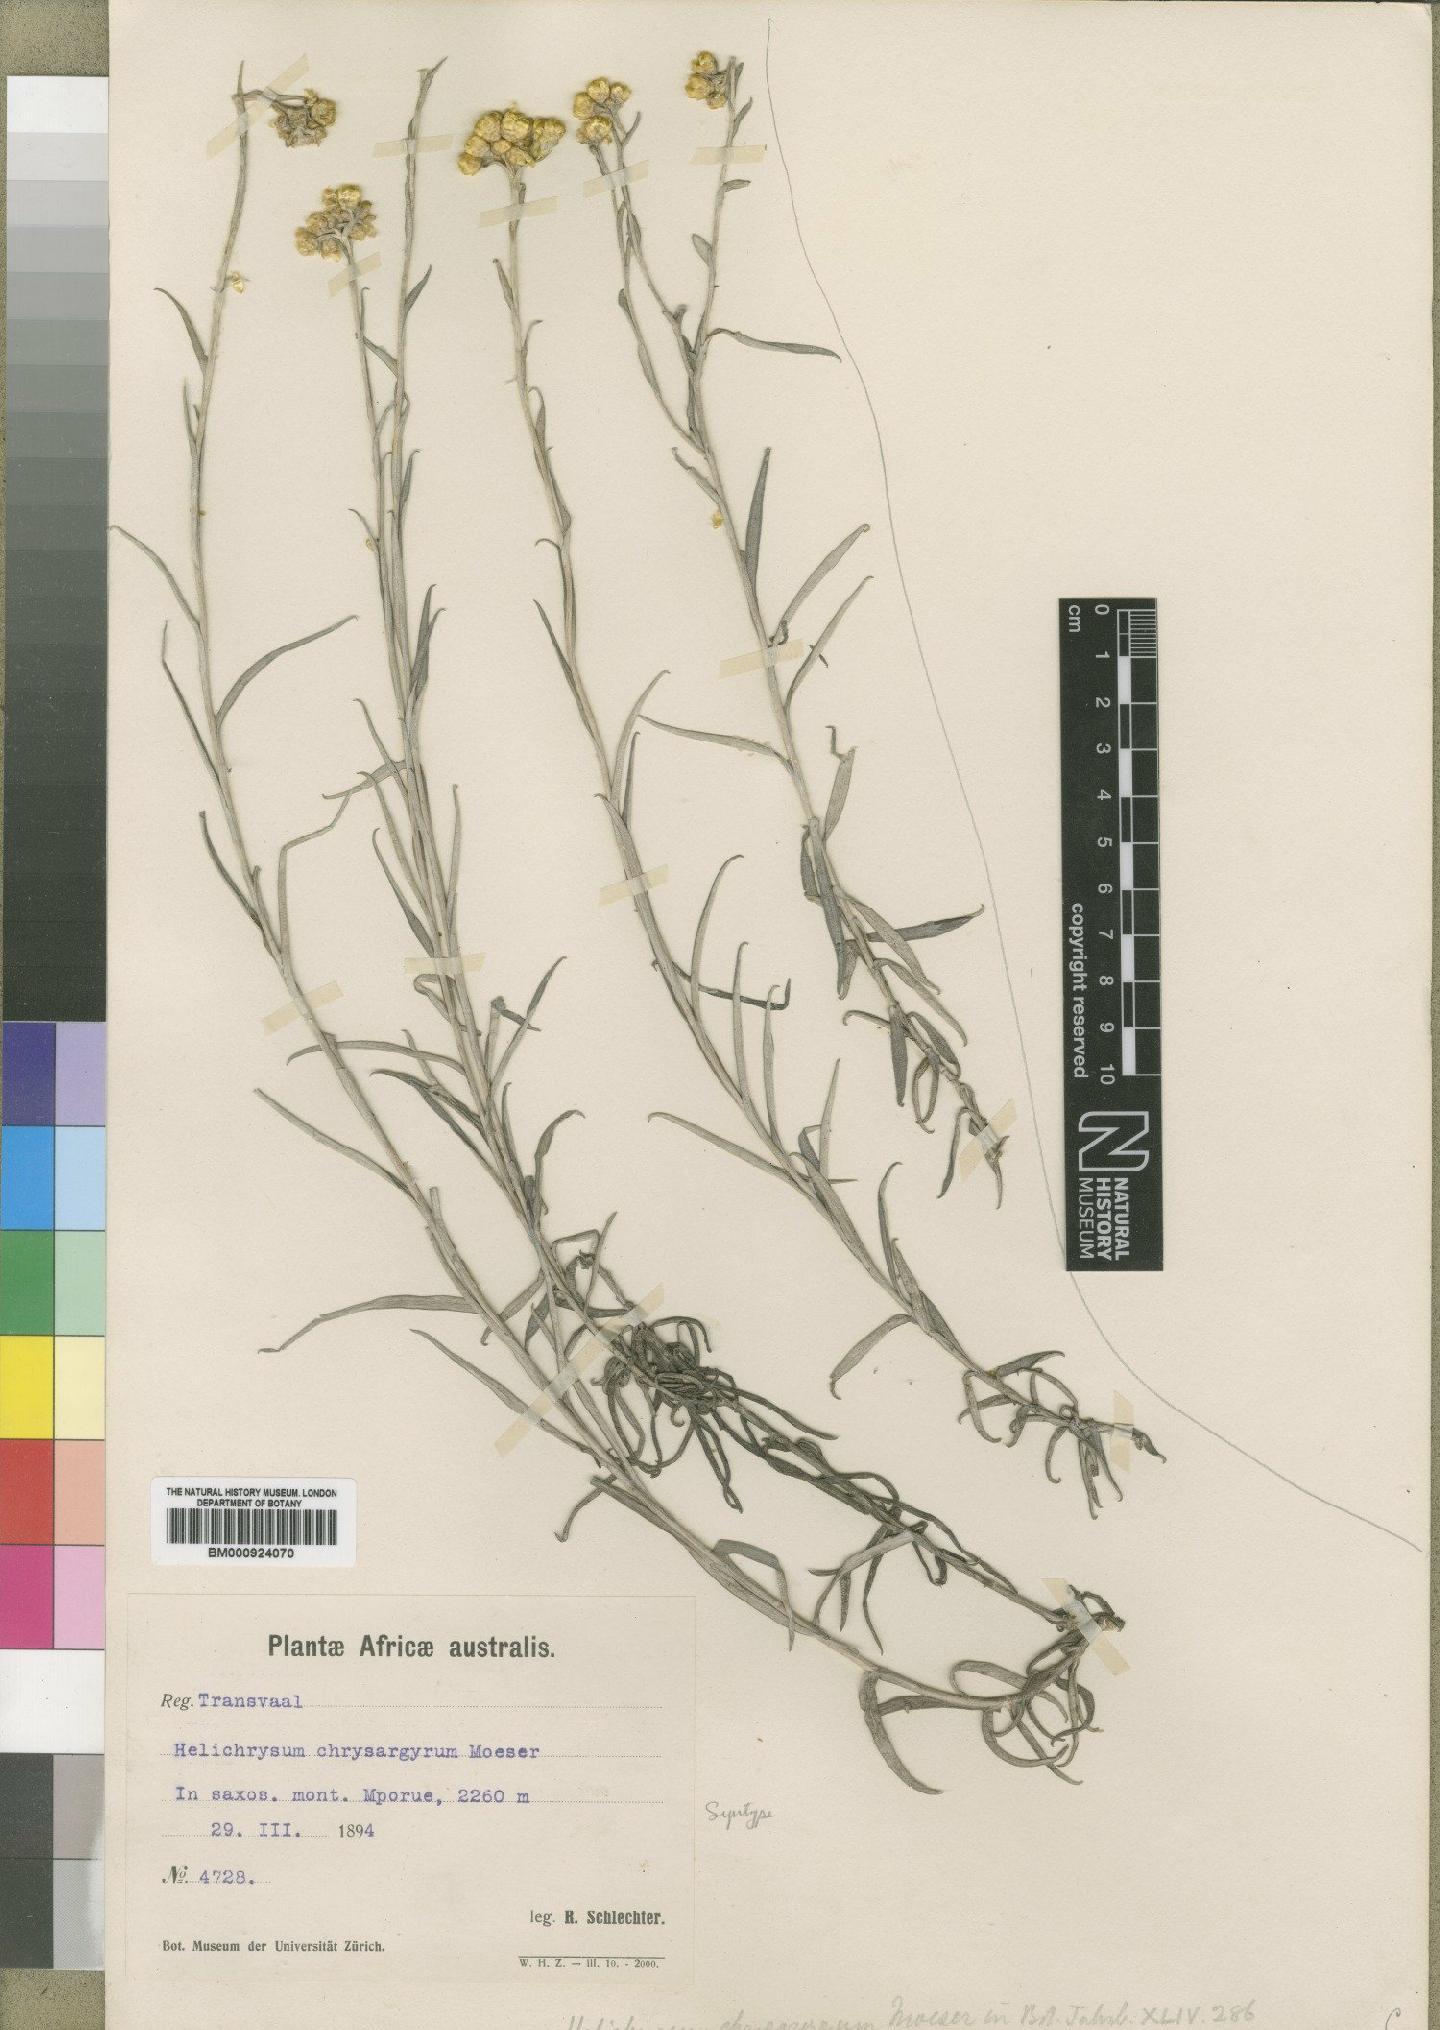 To NHMUK collection (Helichrysum chrysargyrum Moeser; Syntype; NHMUK:ecatalogue:4529098)